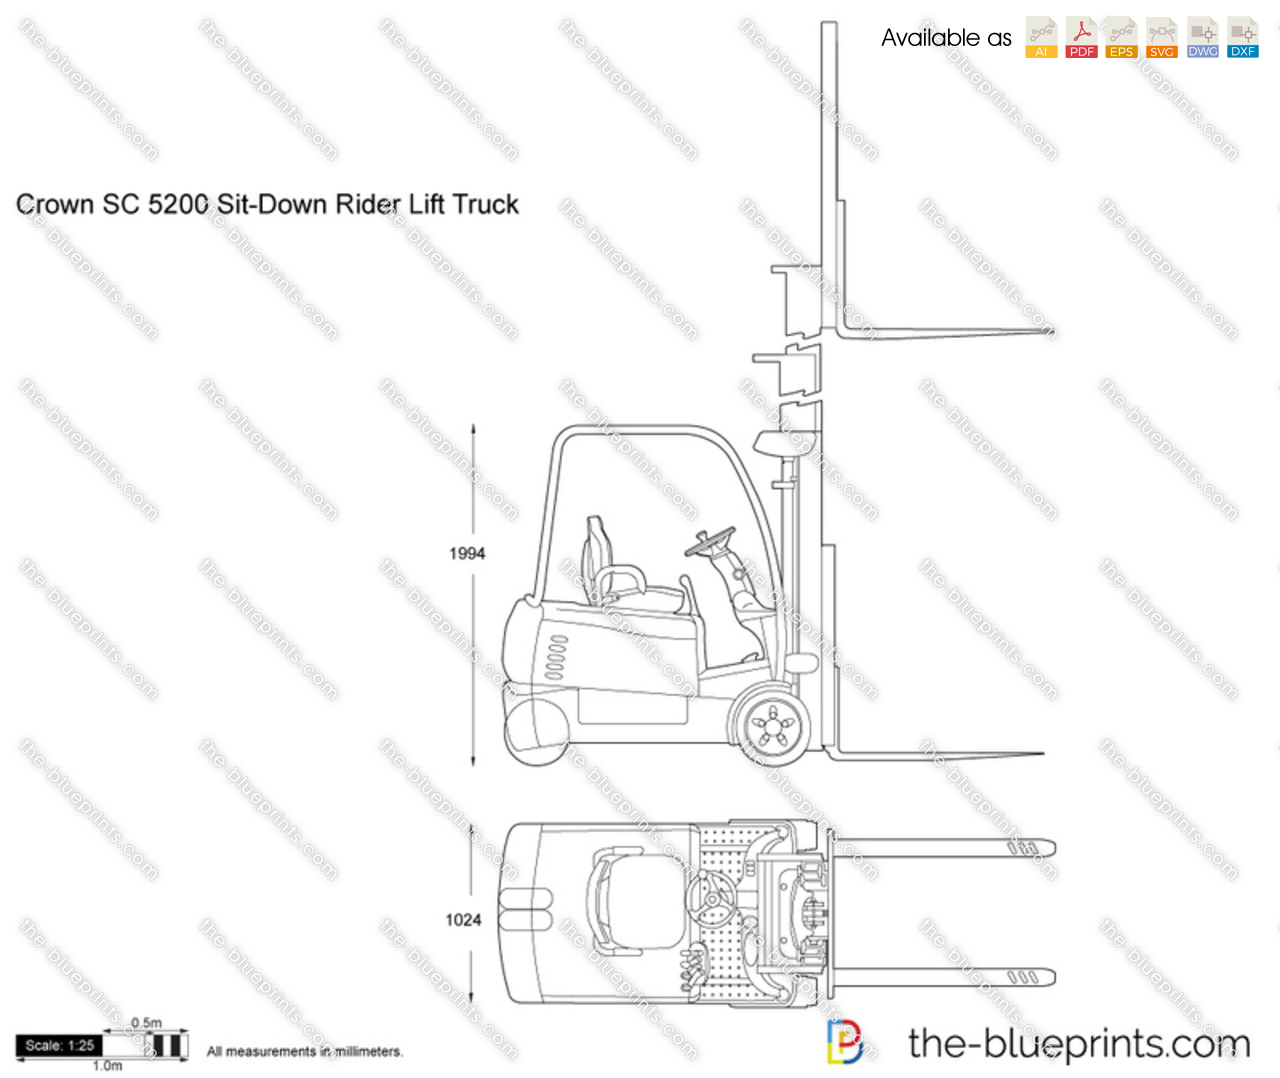 Crown SC 5200 Sit-Down Rider Lift Truck